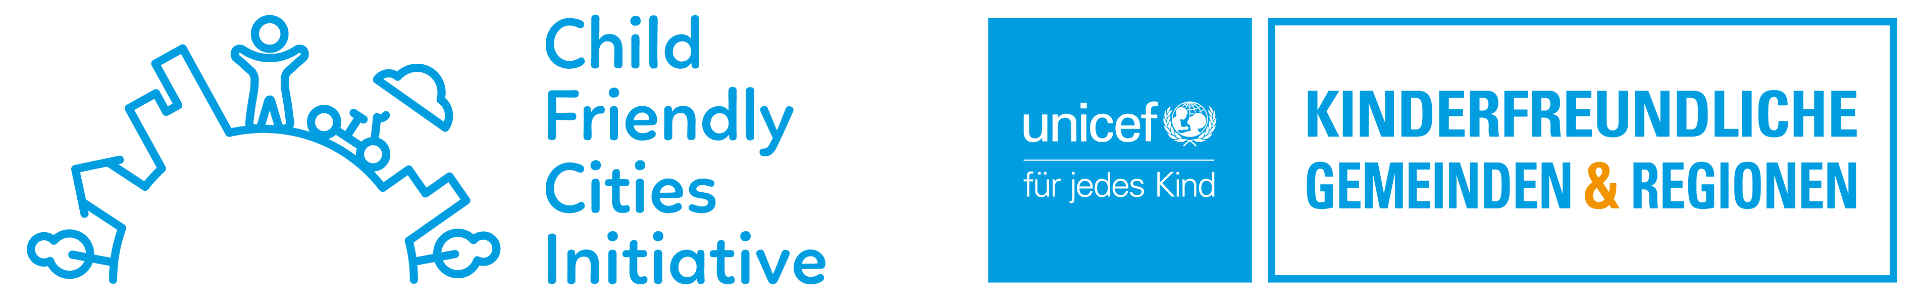 unicef_logo_initiative_cfci.png